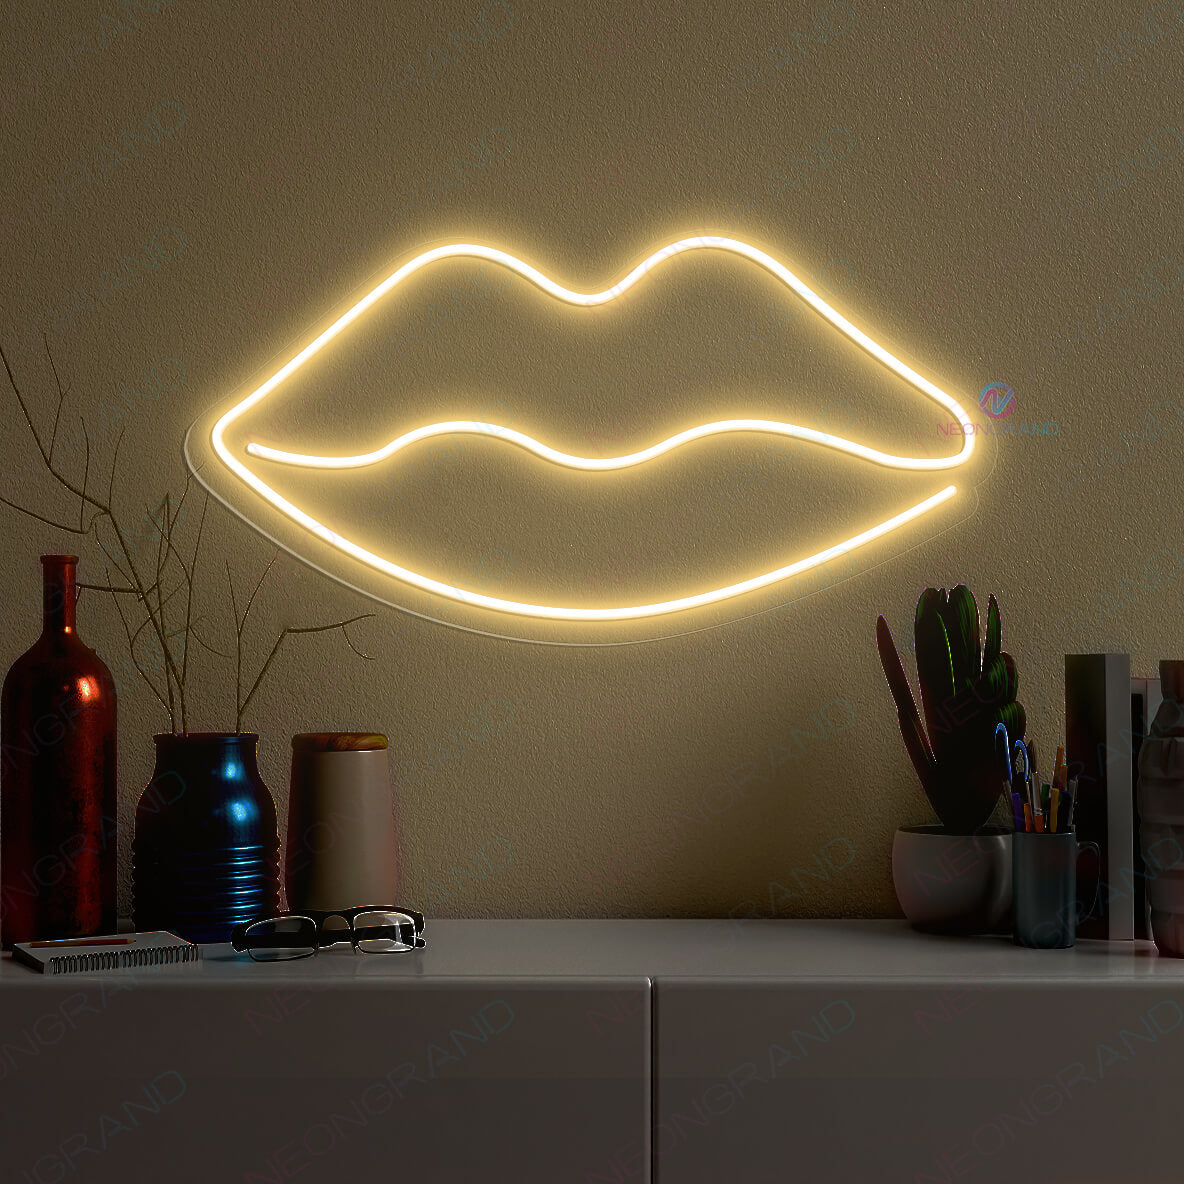 Lips Neon Sign Aesthetics Glow Led Light gold yellow